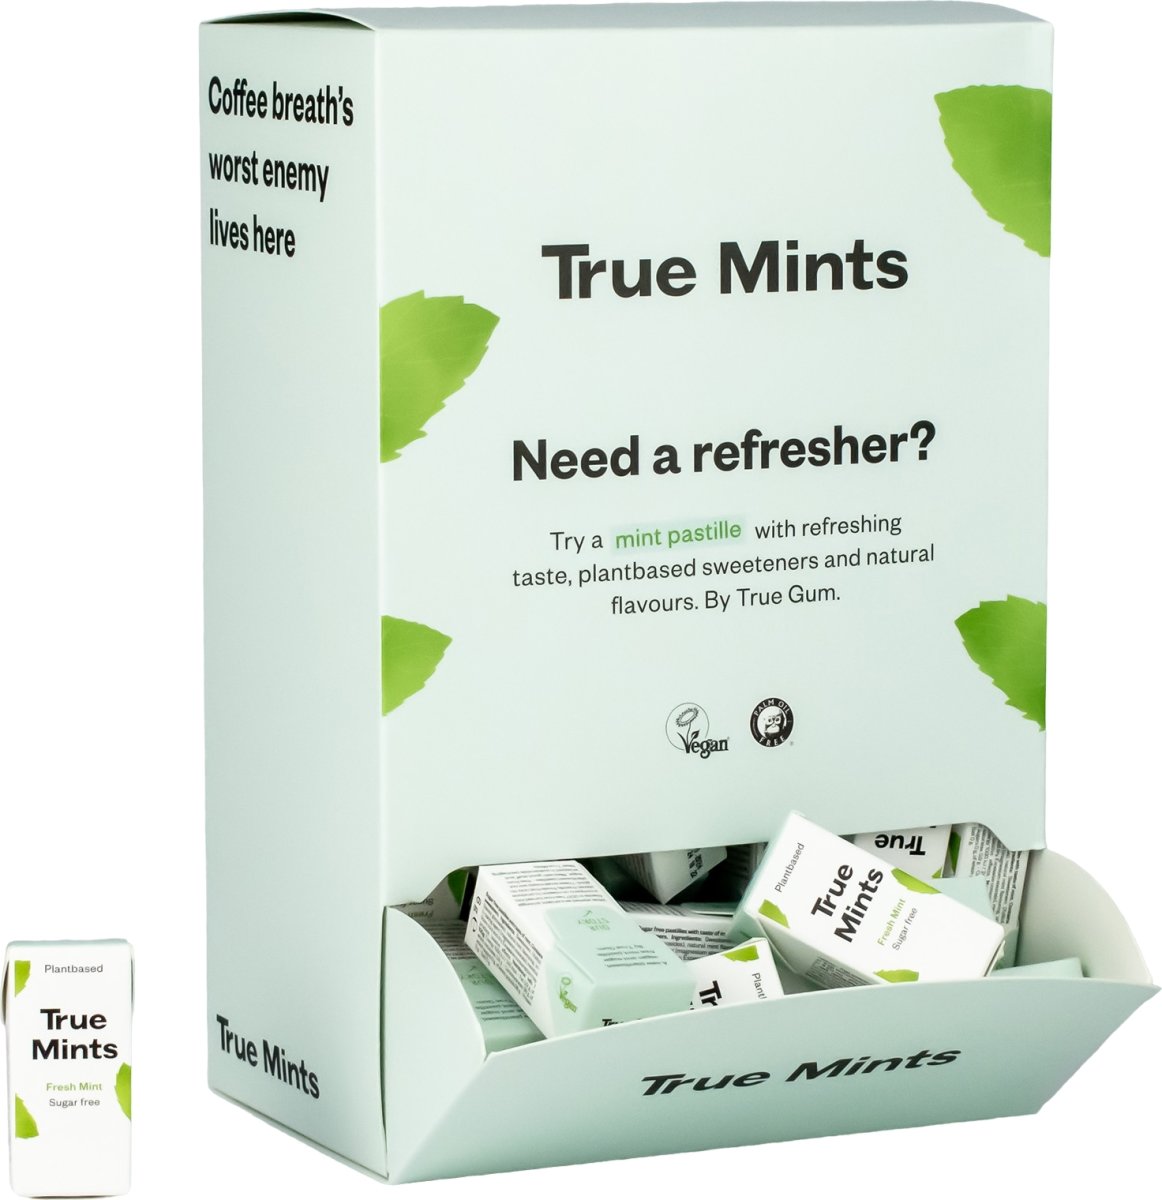 True Mints Mintpastil Display, 80 pakker á 8 stk.